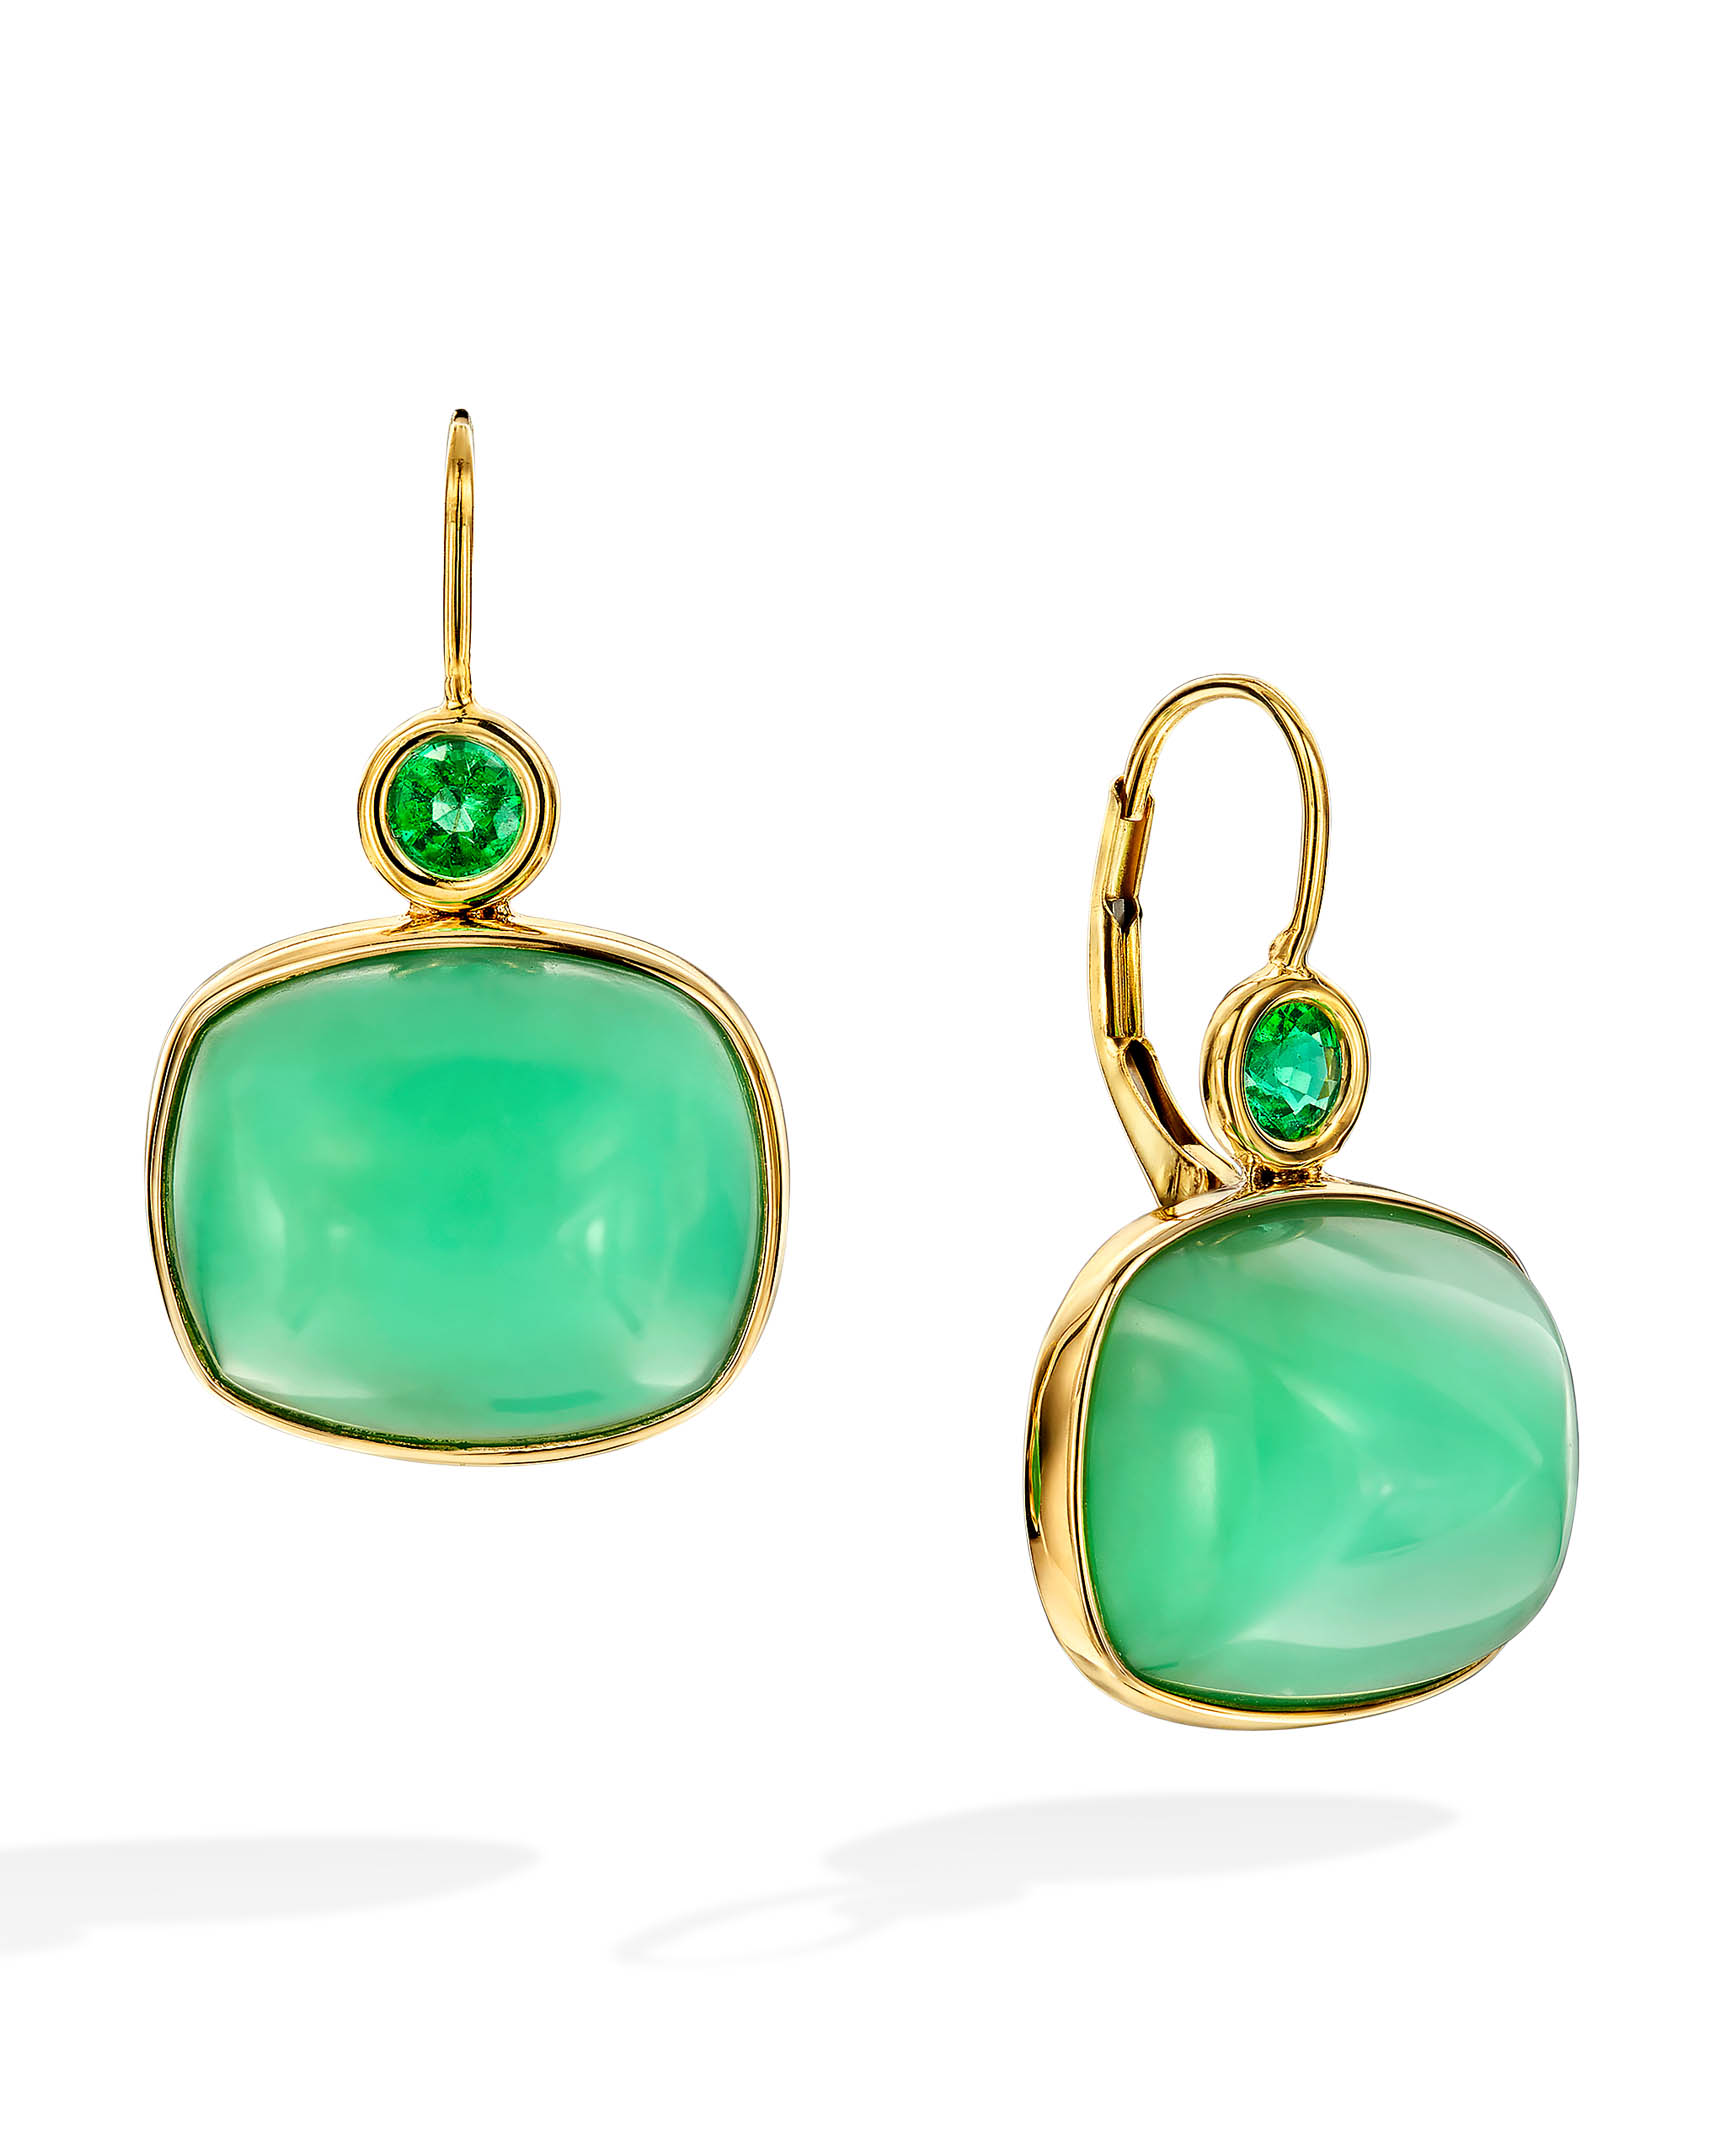 Details more than 229 green opal earrings